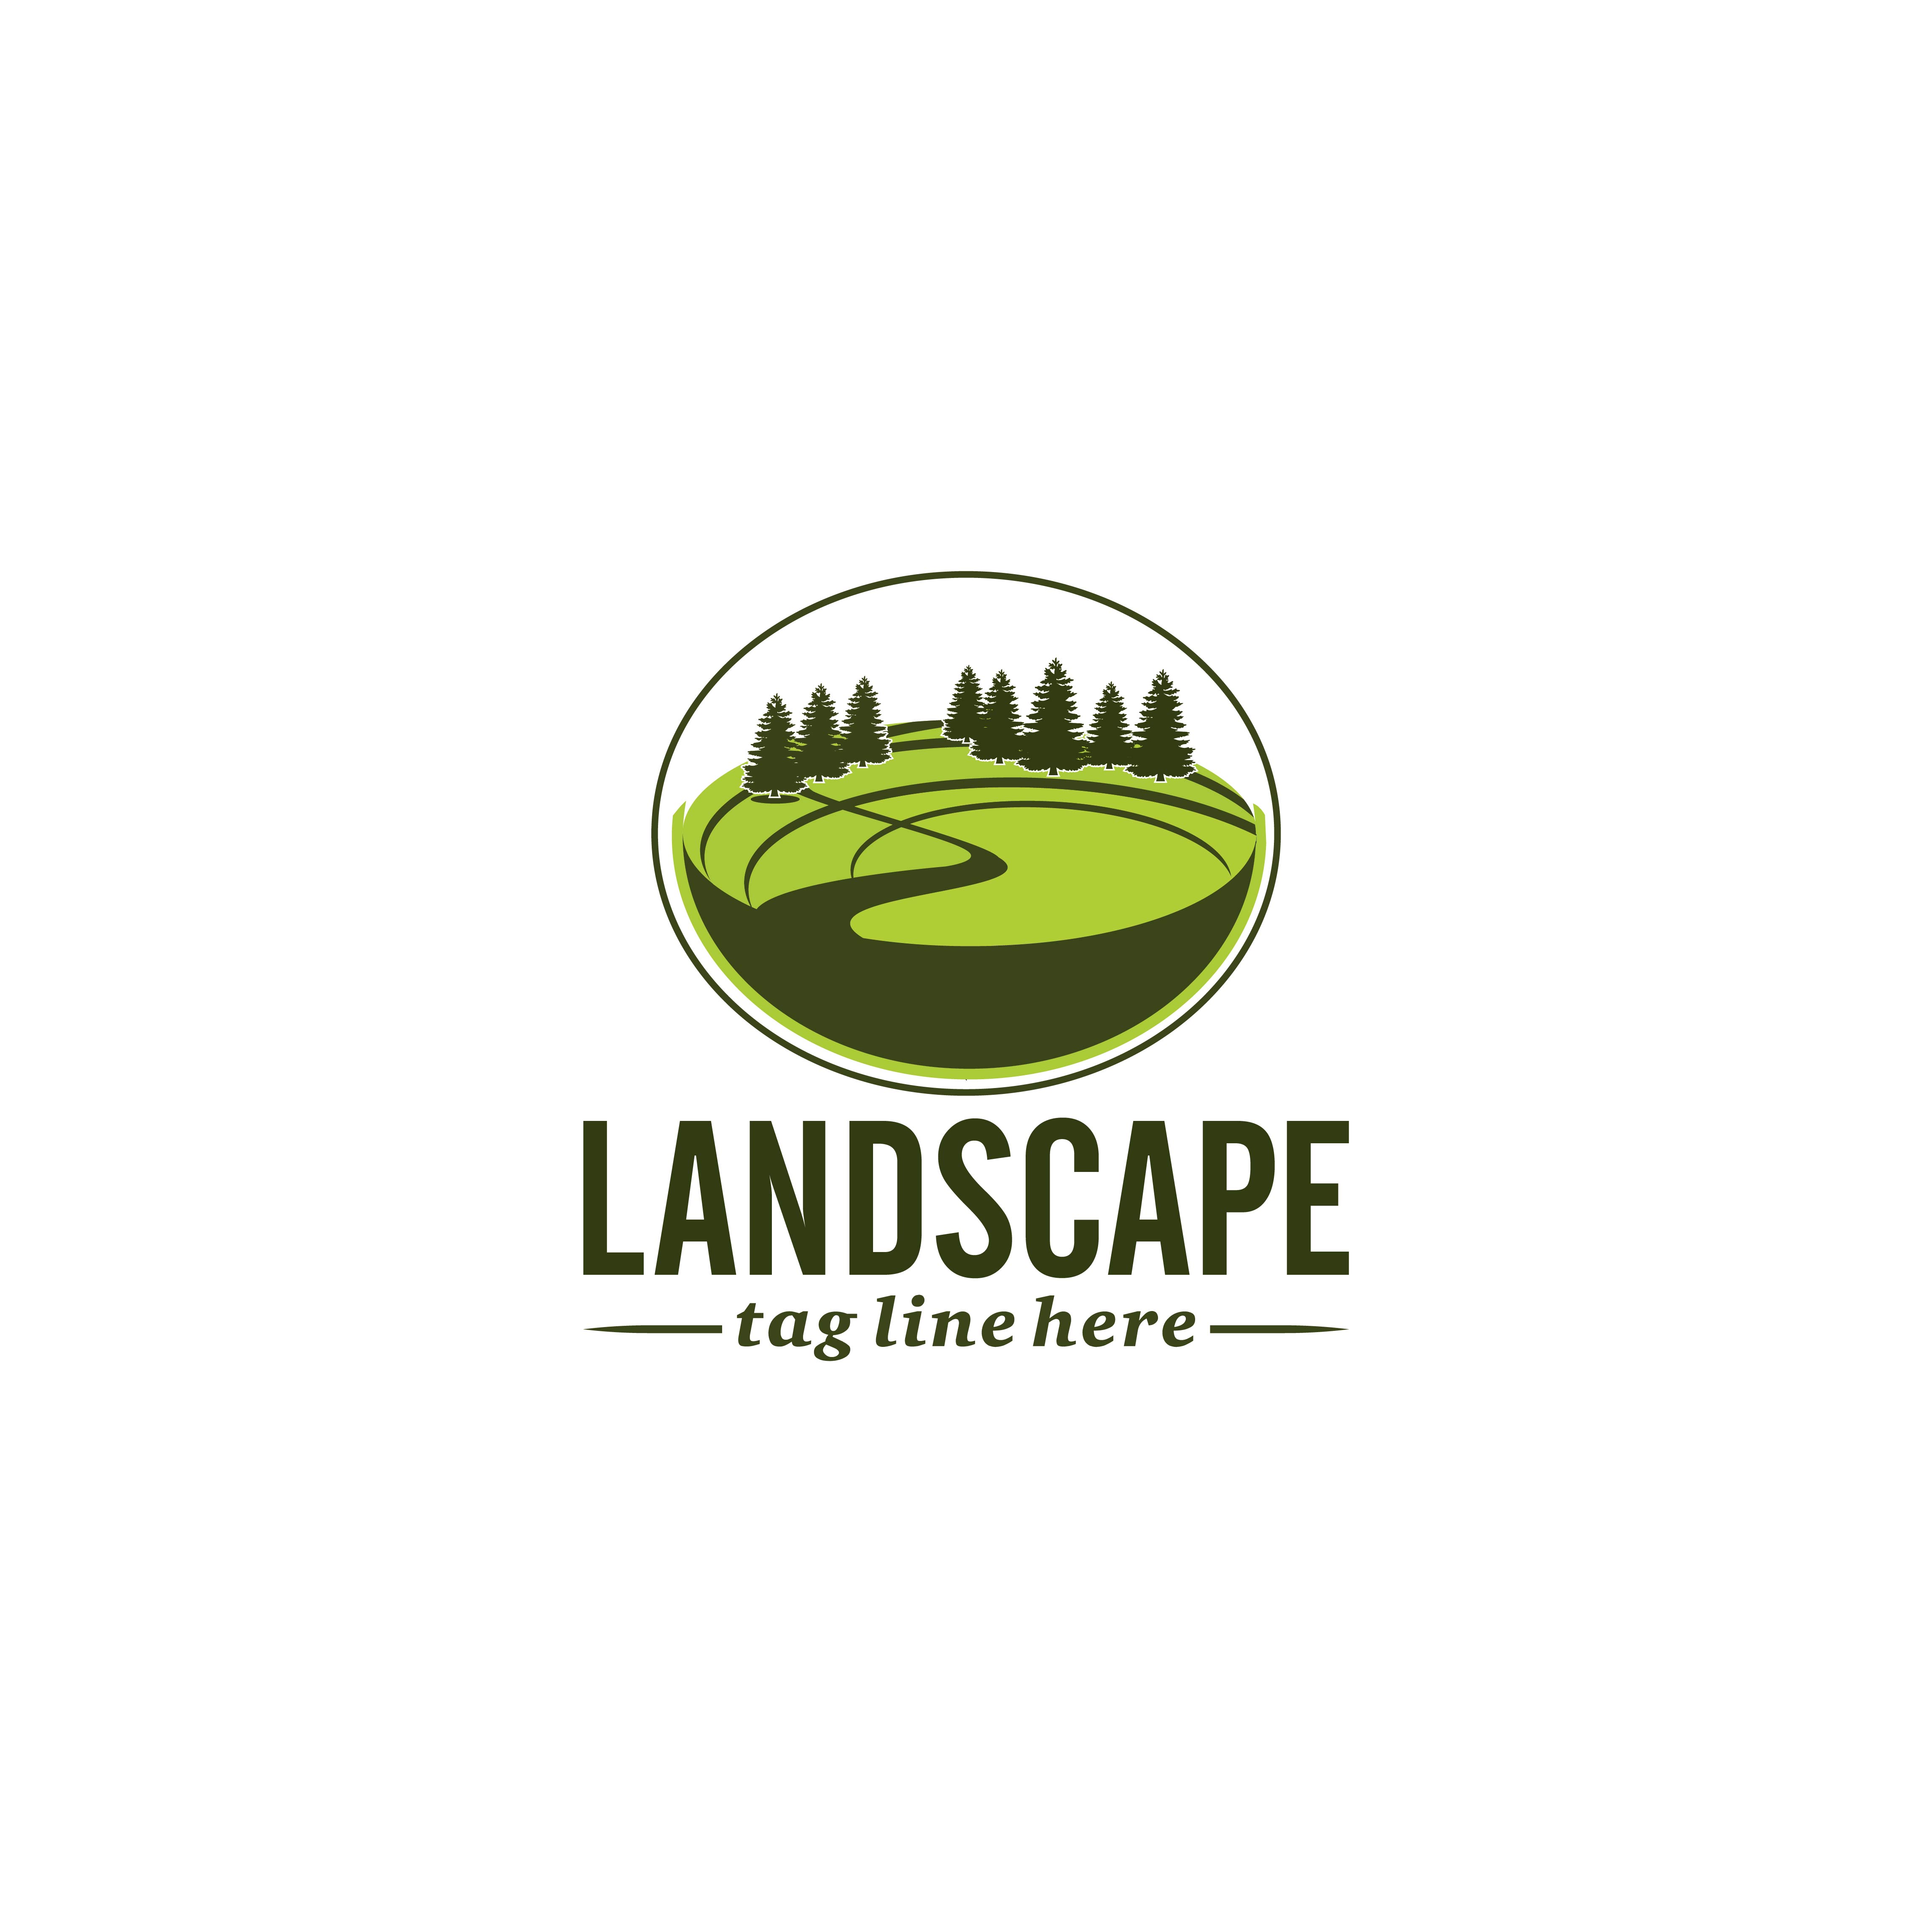 Elegant landscaping logo Design for your business preview image.